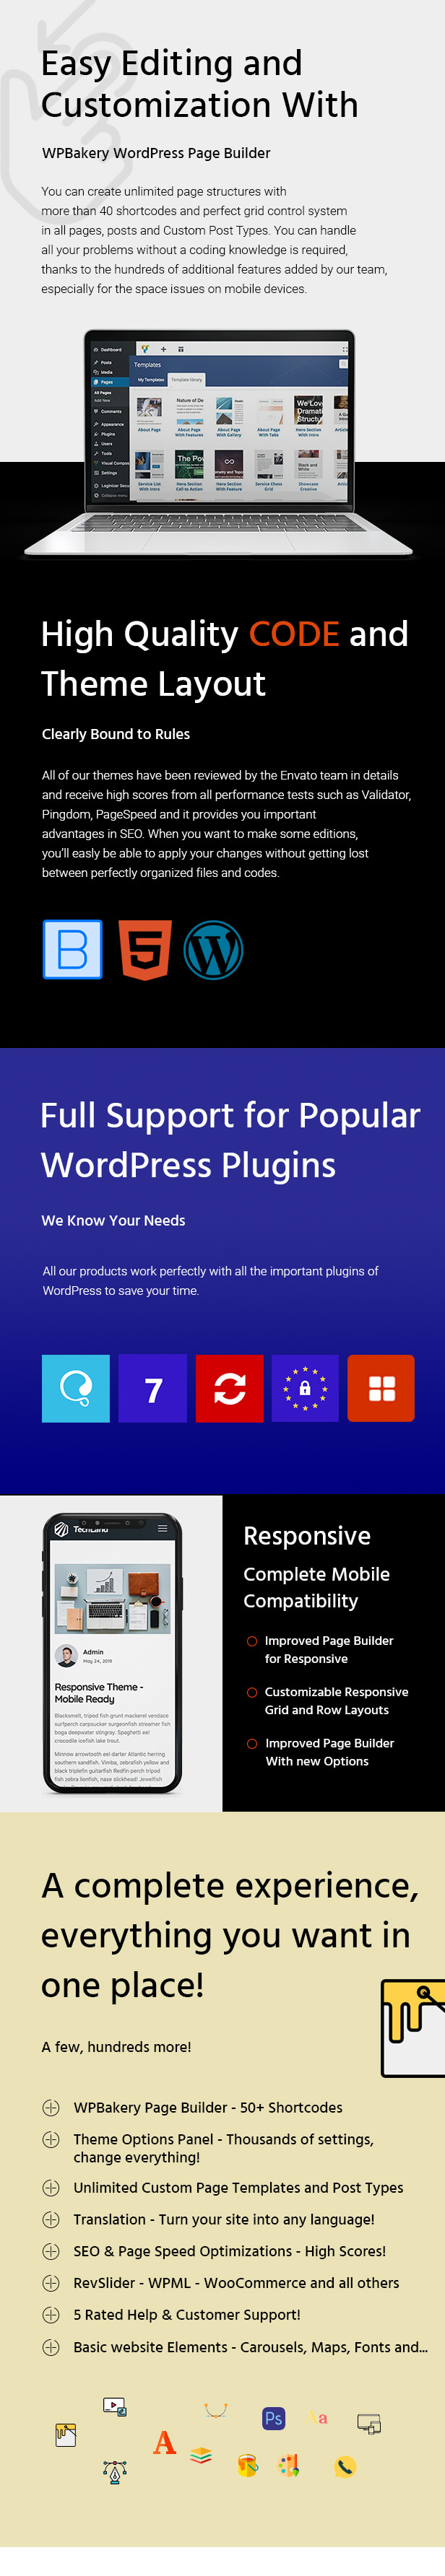 promote - WordPress simple clean OnePage marketing theme